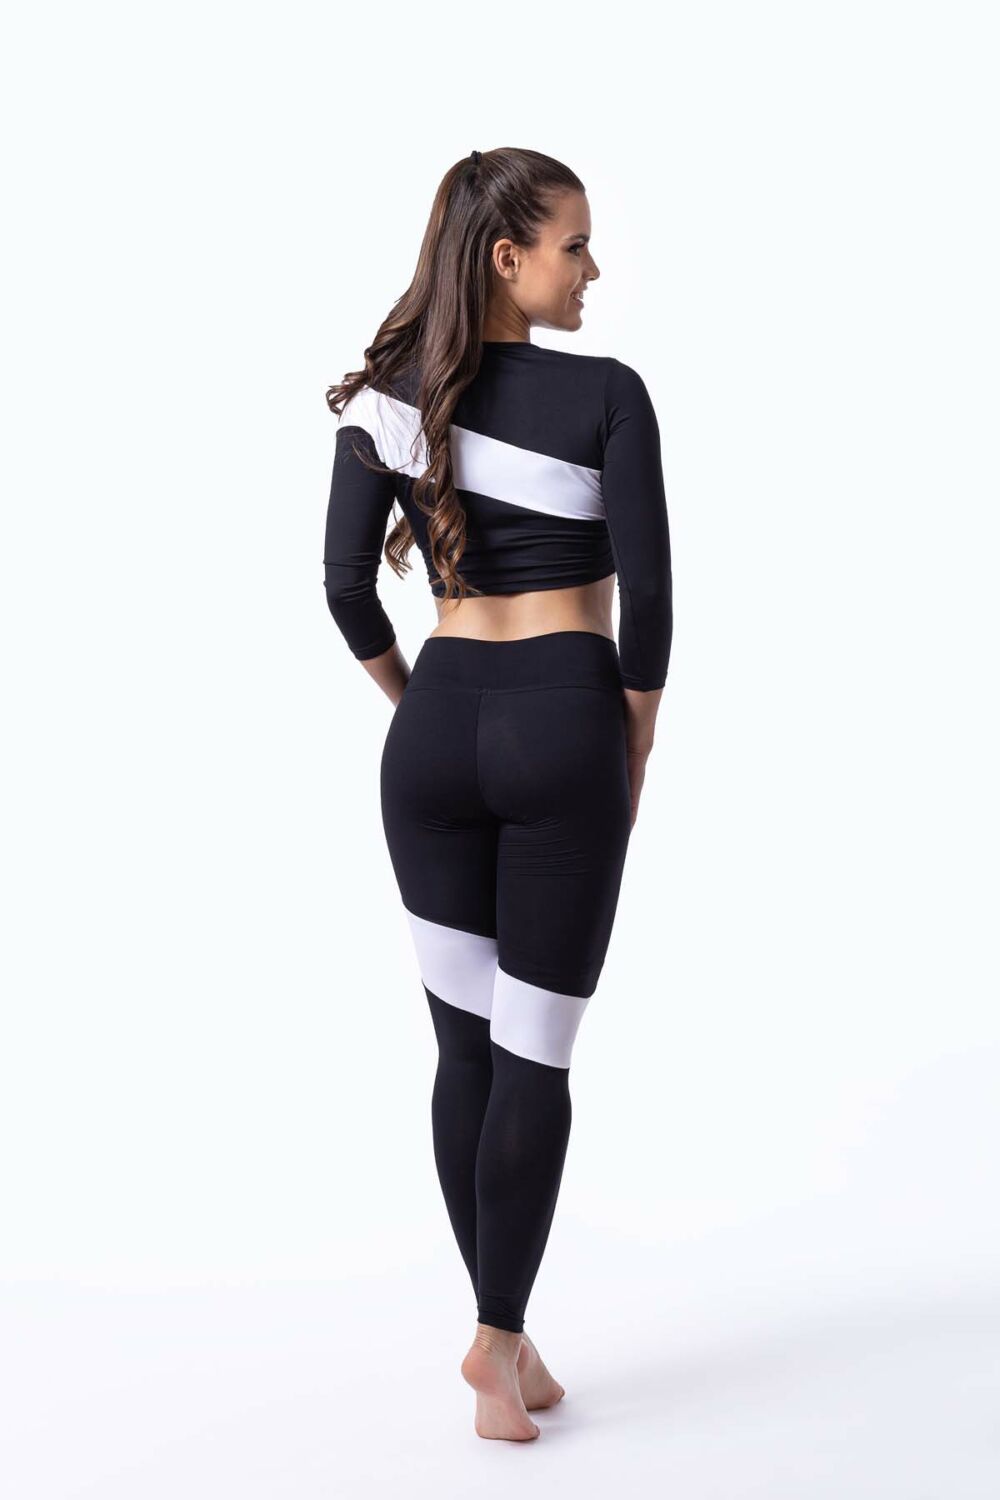 Indi-Go Timella black and white fitness leggings 'M'